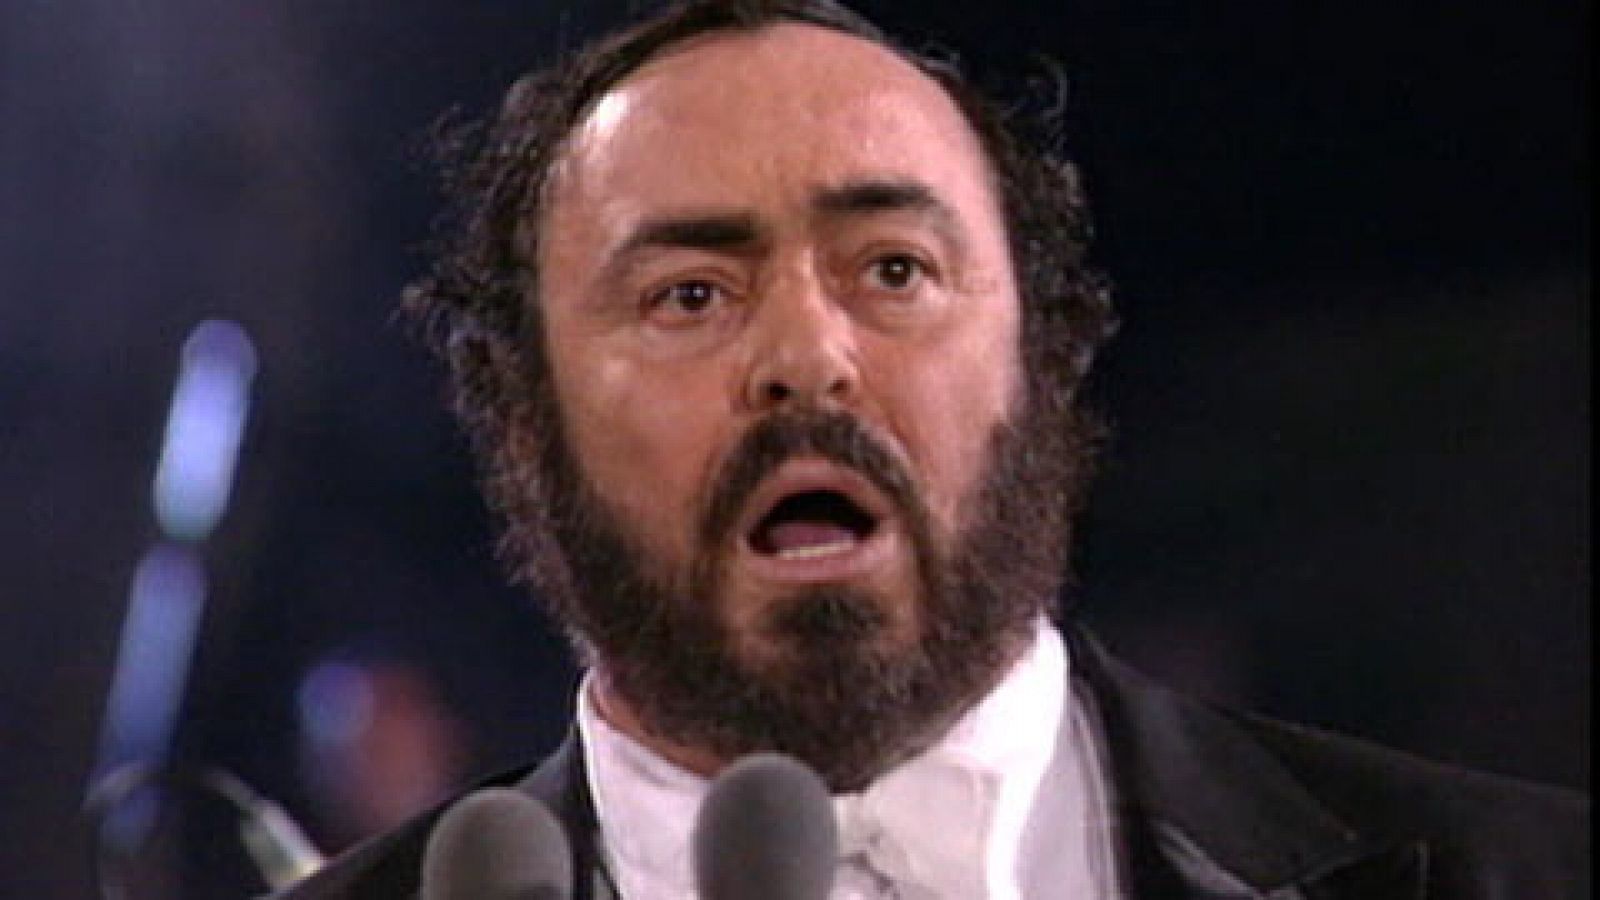 Telediario 1: Se cumplen 10 años de la muerte de Luciano Pavarotti | RTVE Play